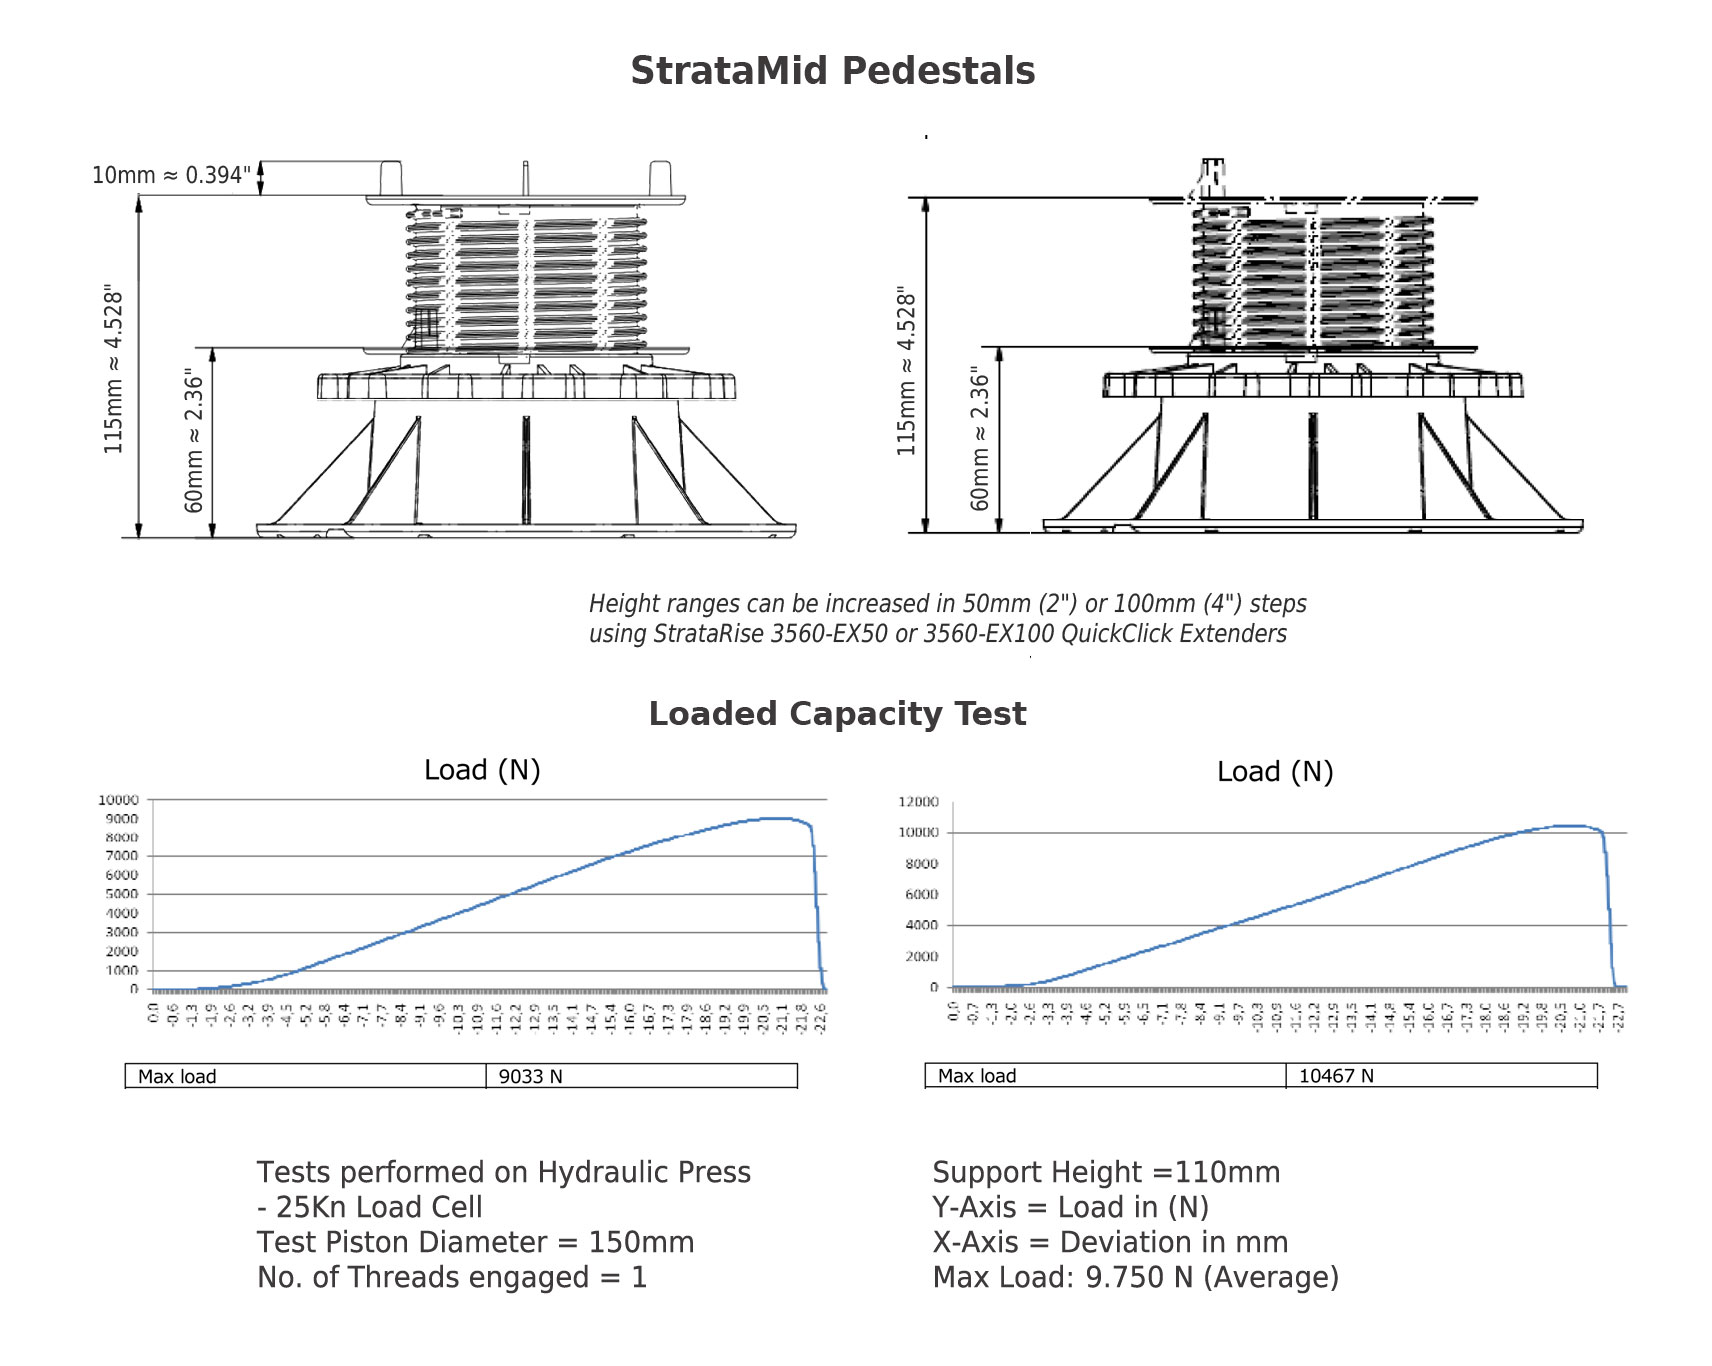 StrataMid Pedestals Technical Information